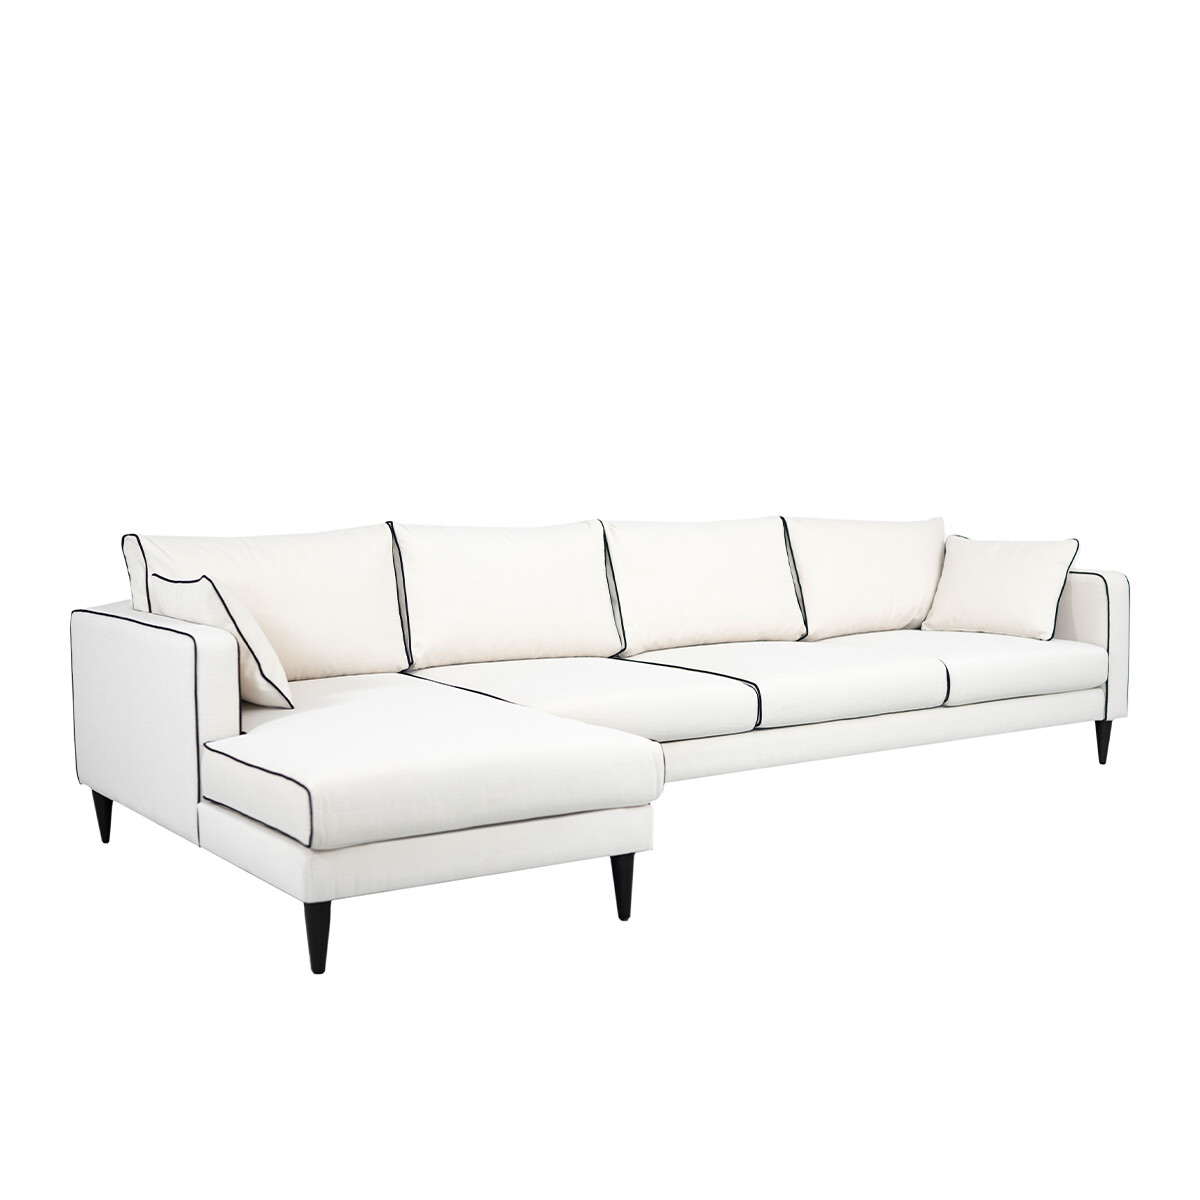 Noa corner sofa - Left angle, L300 x P150 x H75 cm - Cotton - image 2